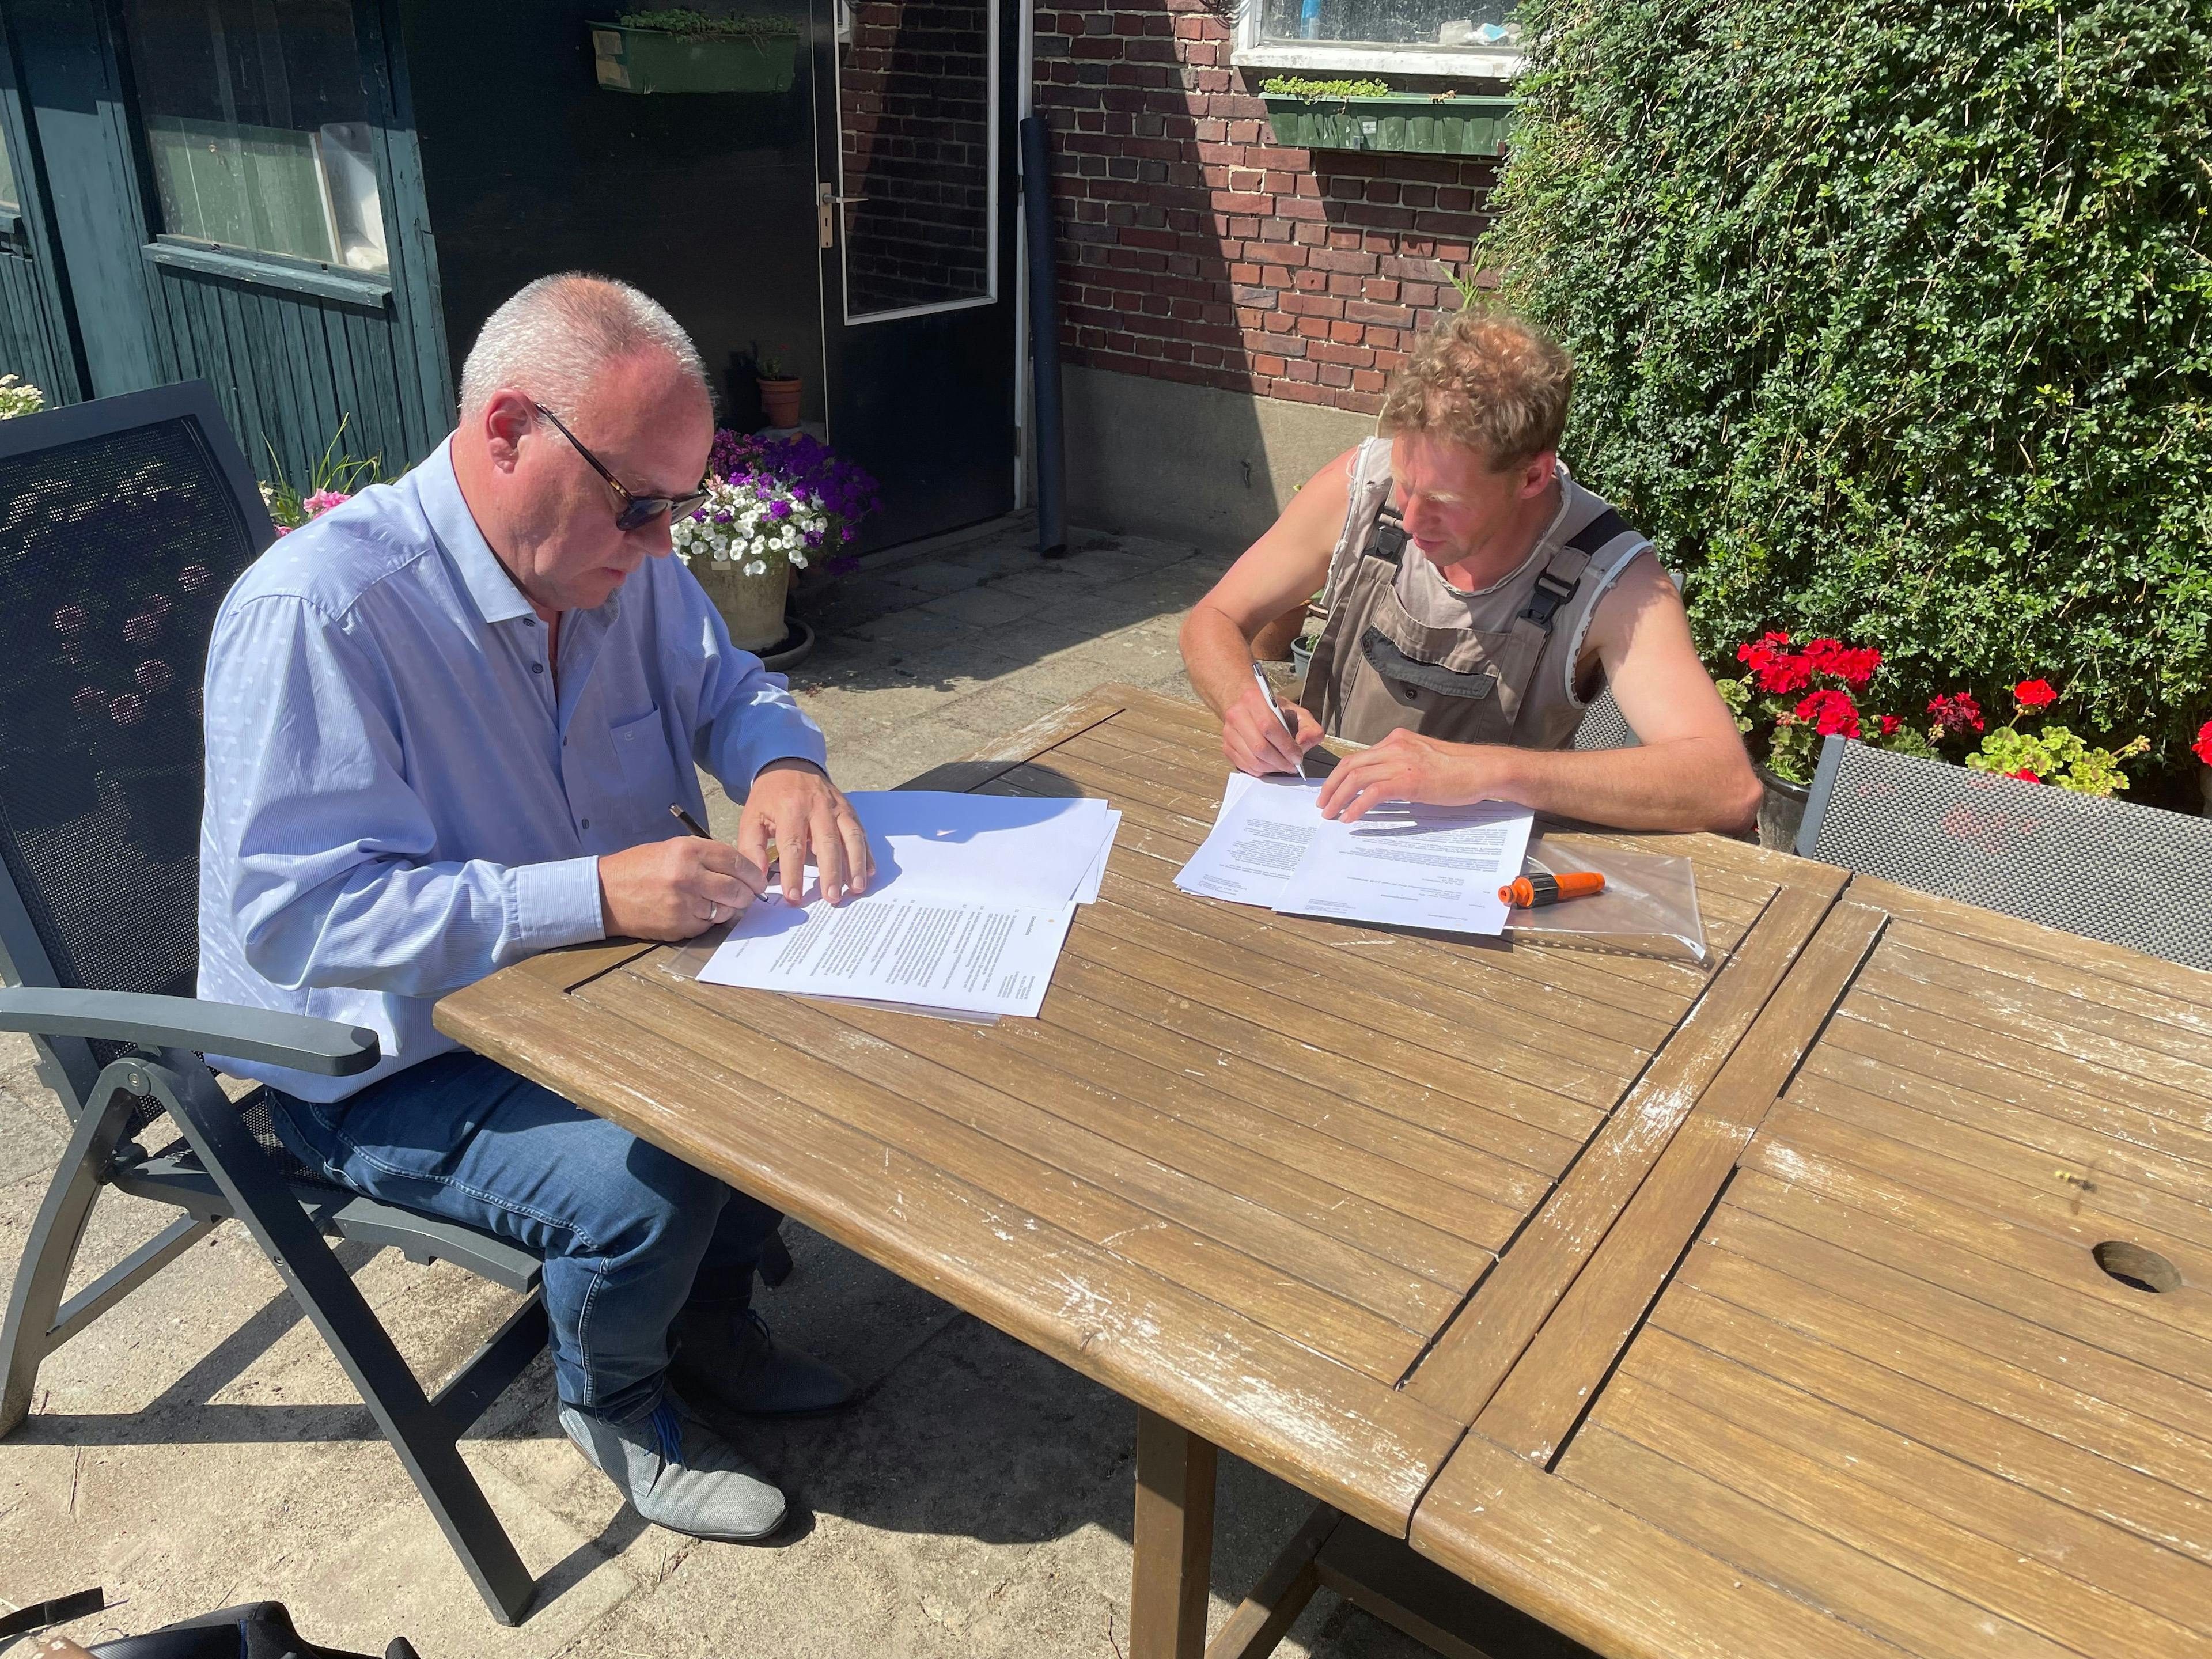 Greenbuddies Dutch team, signing a contract